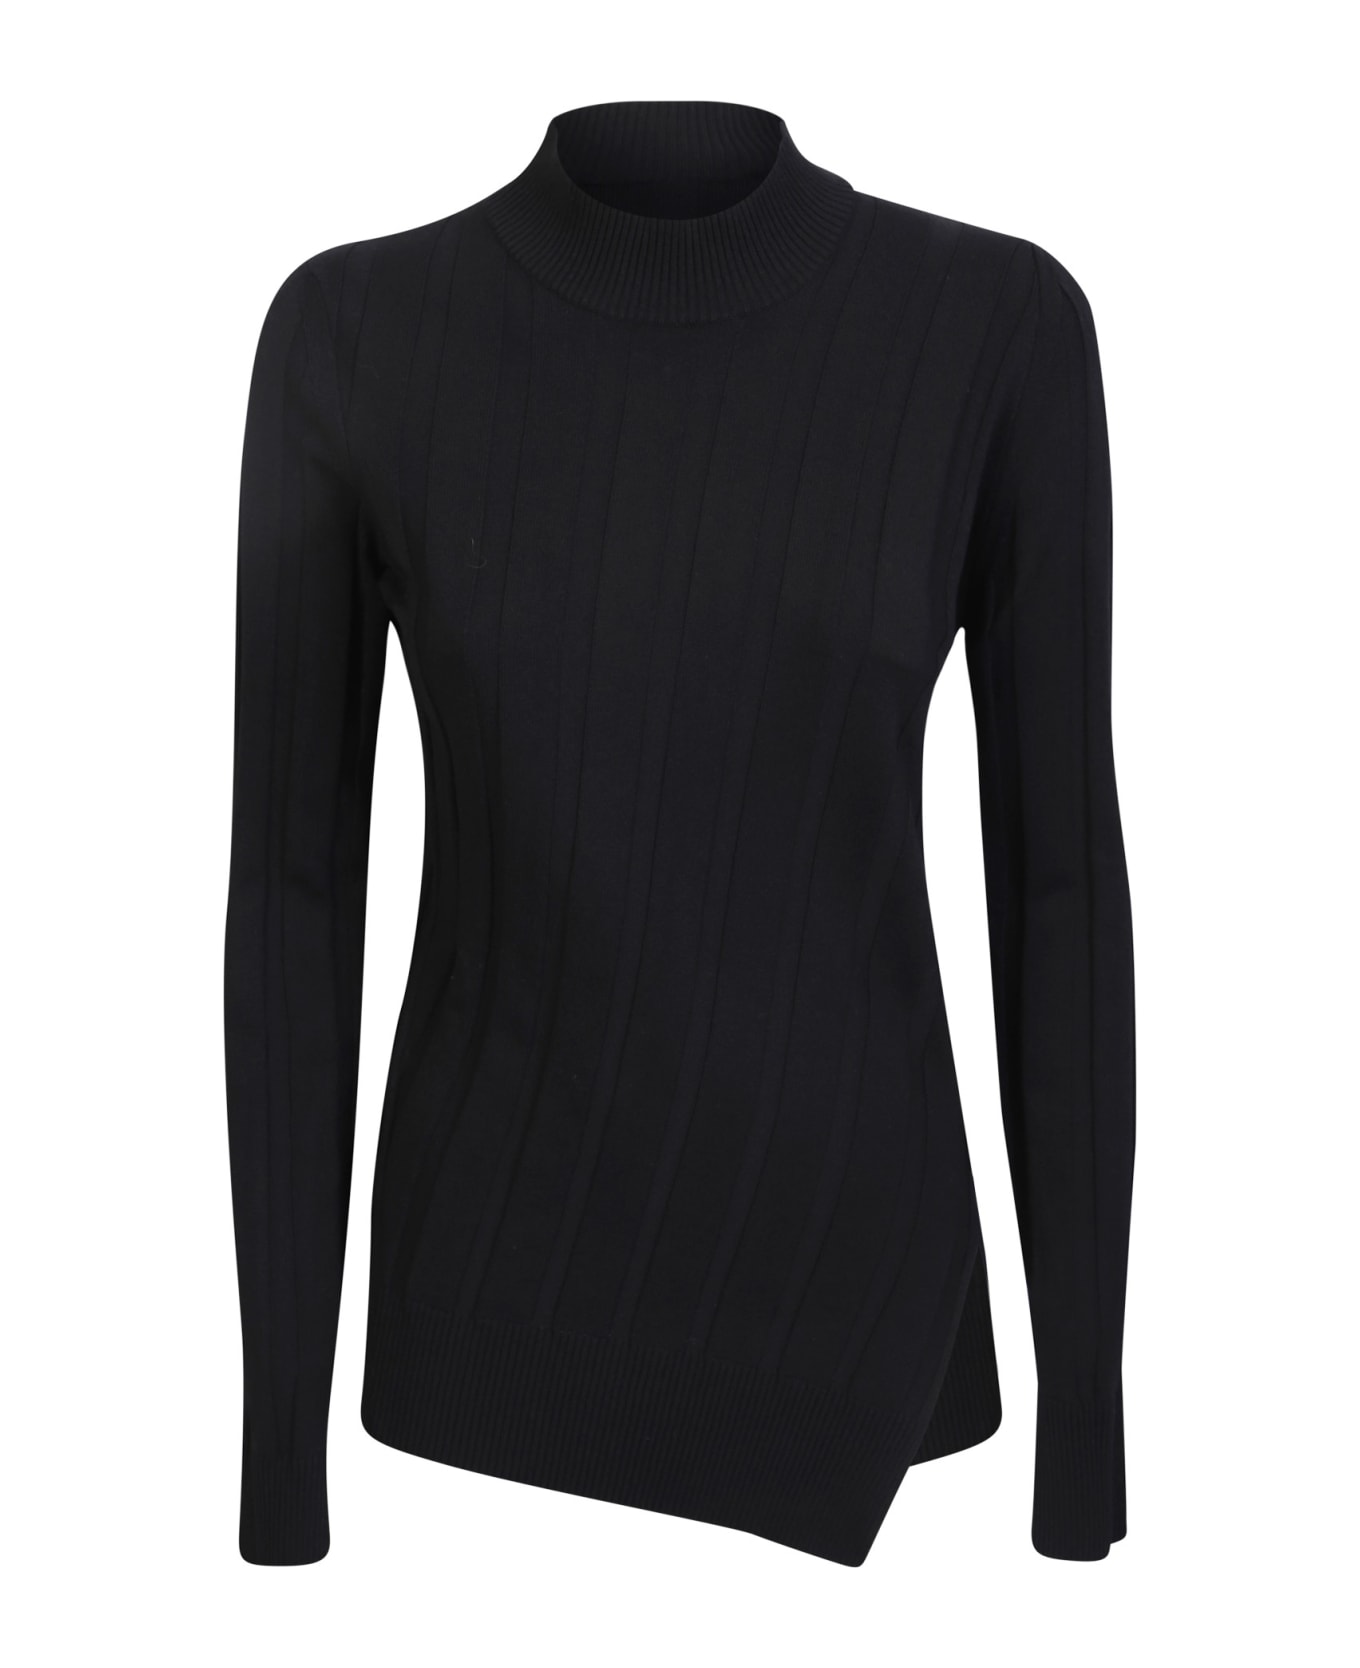 Stella McCartney Asymmetrical Black Ribbed Shirt - Black